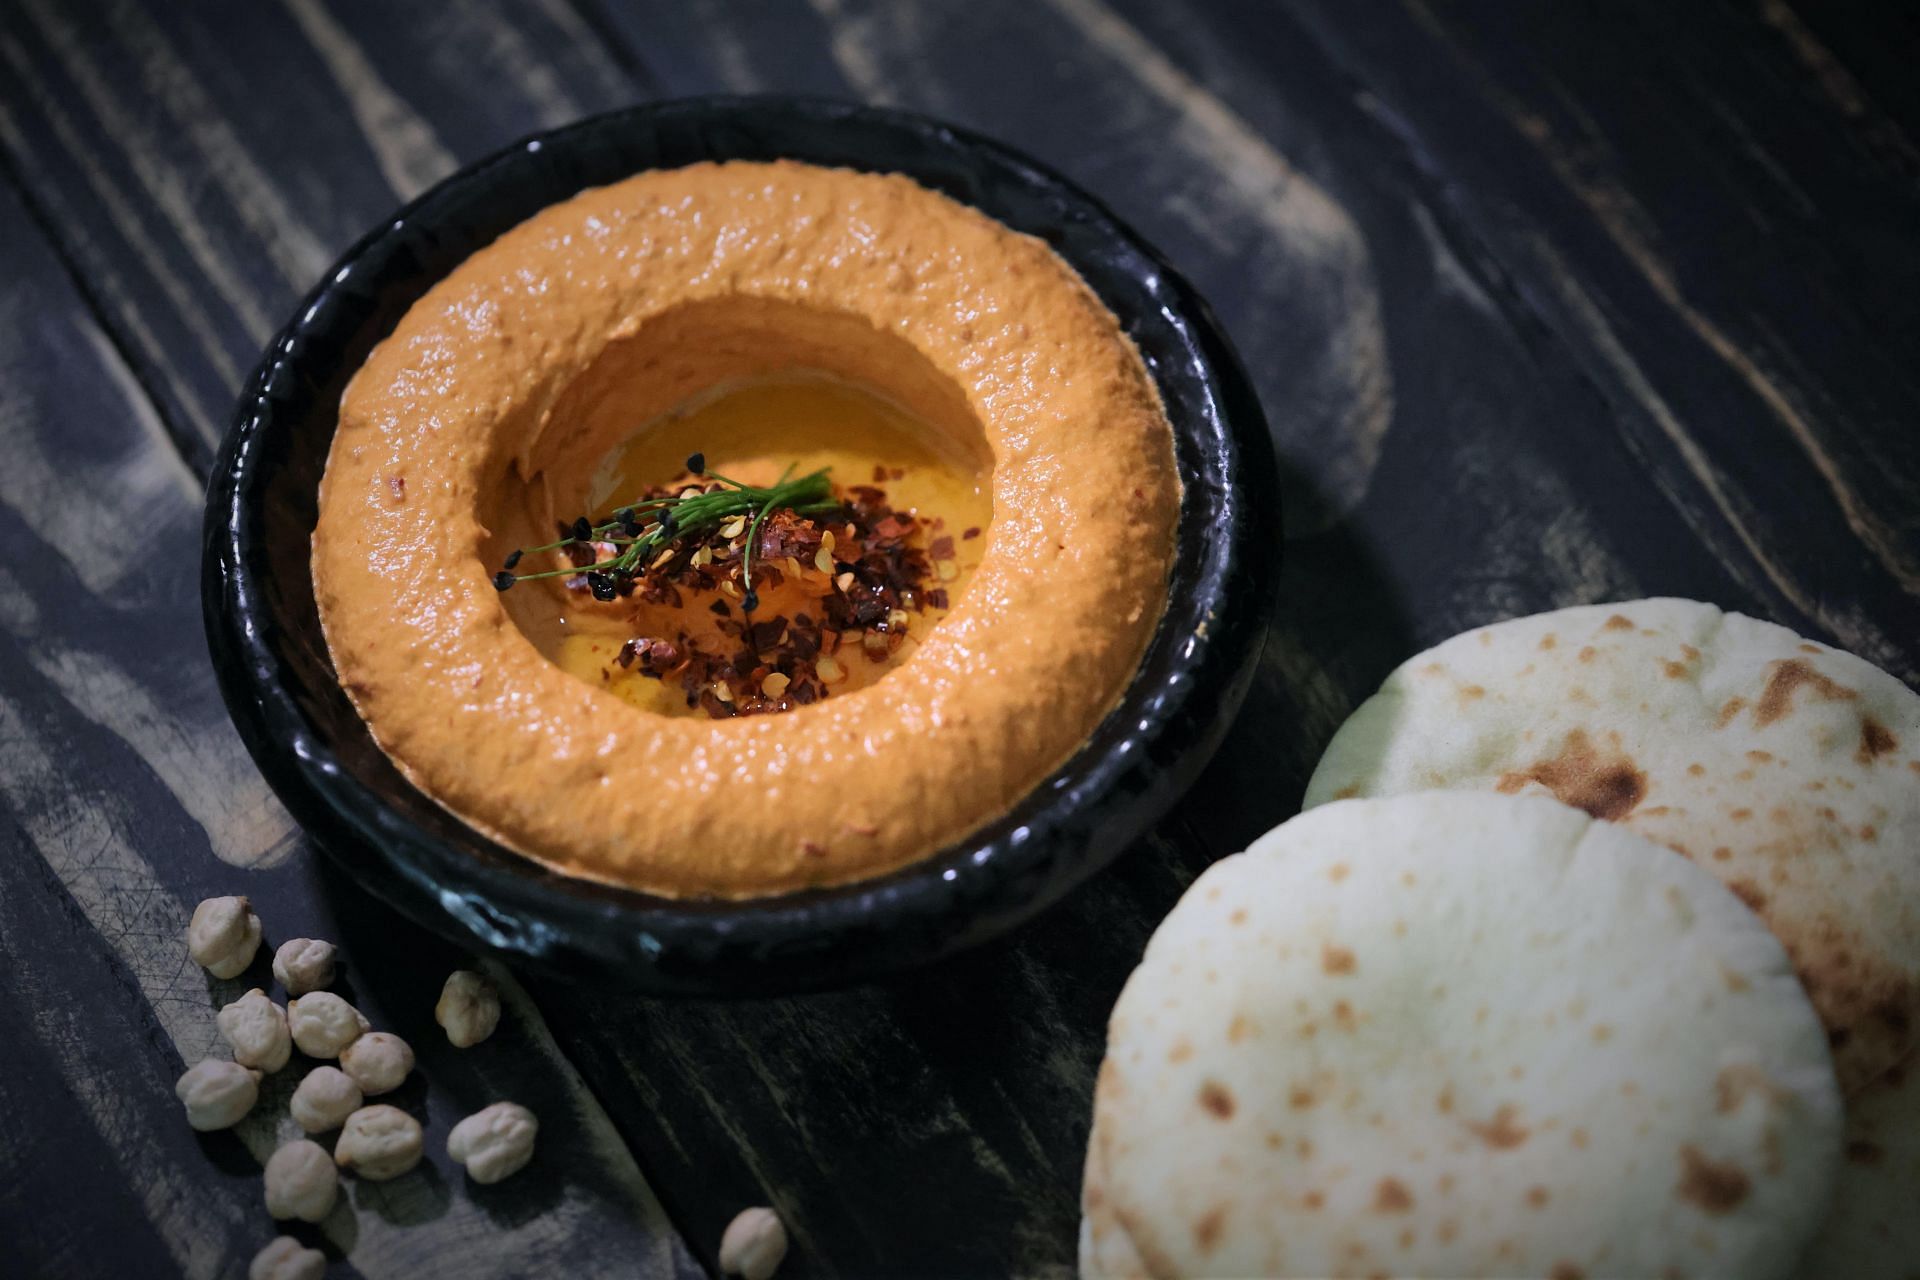 Hummus is made of healthy ingredients like chickpeas, tahini and olive oil. (Image via Pexels/Shameel Mukkath)